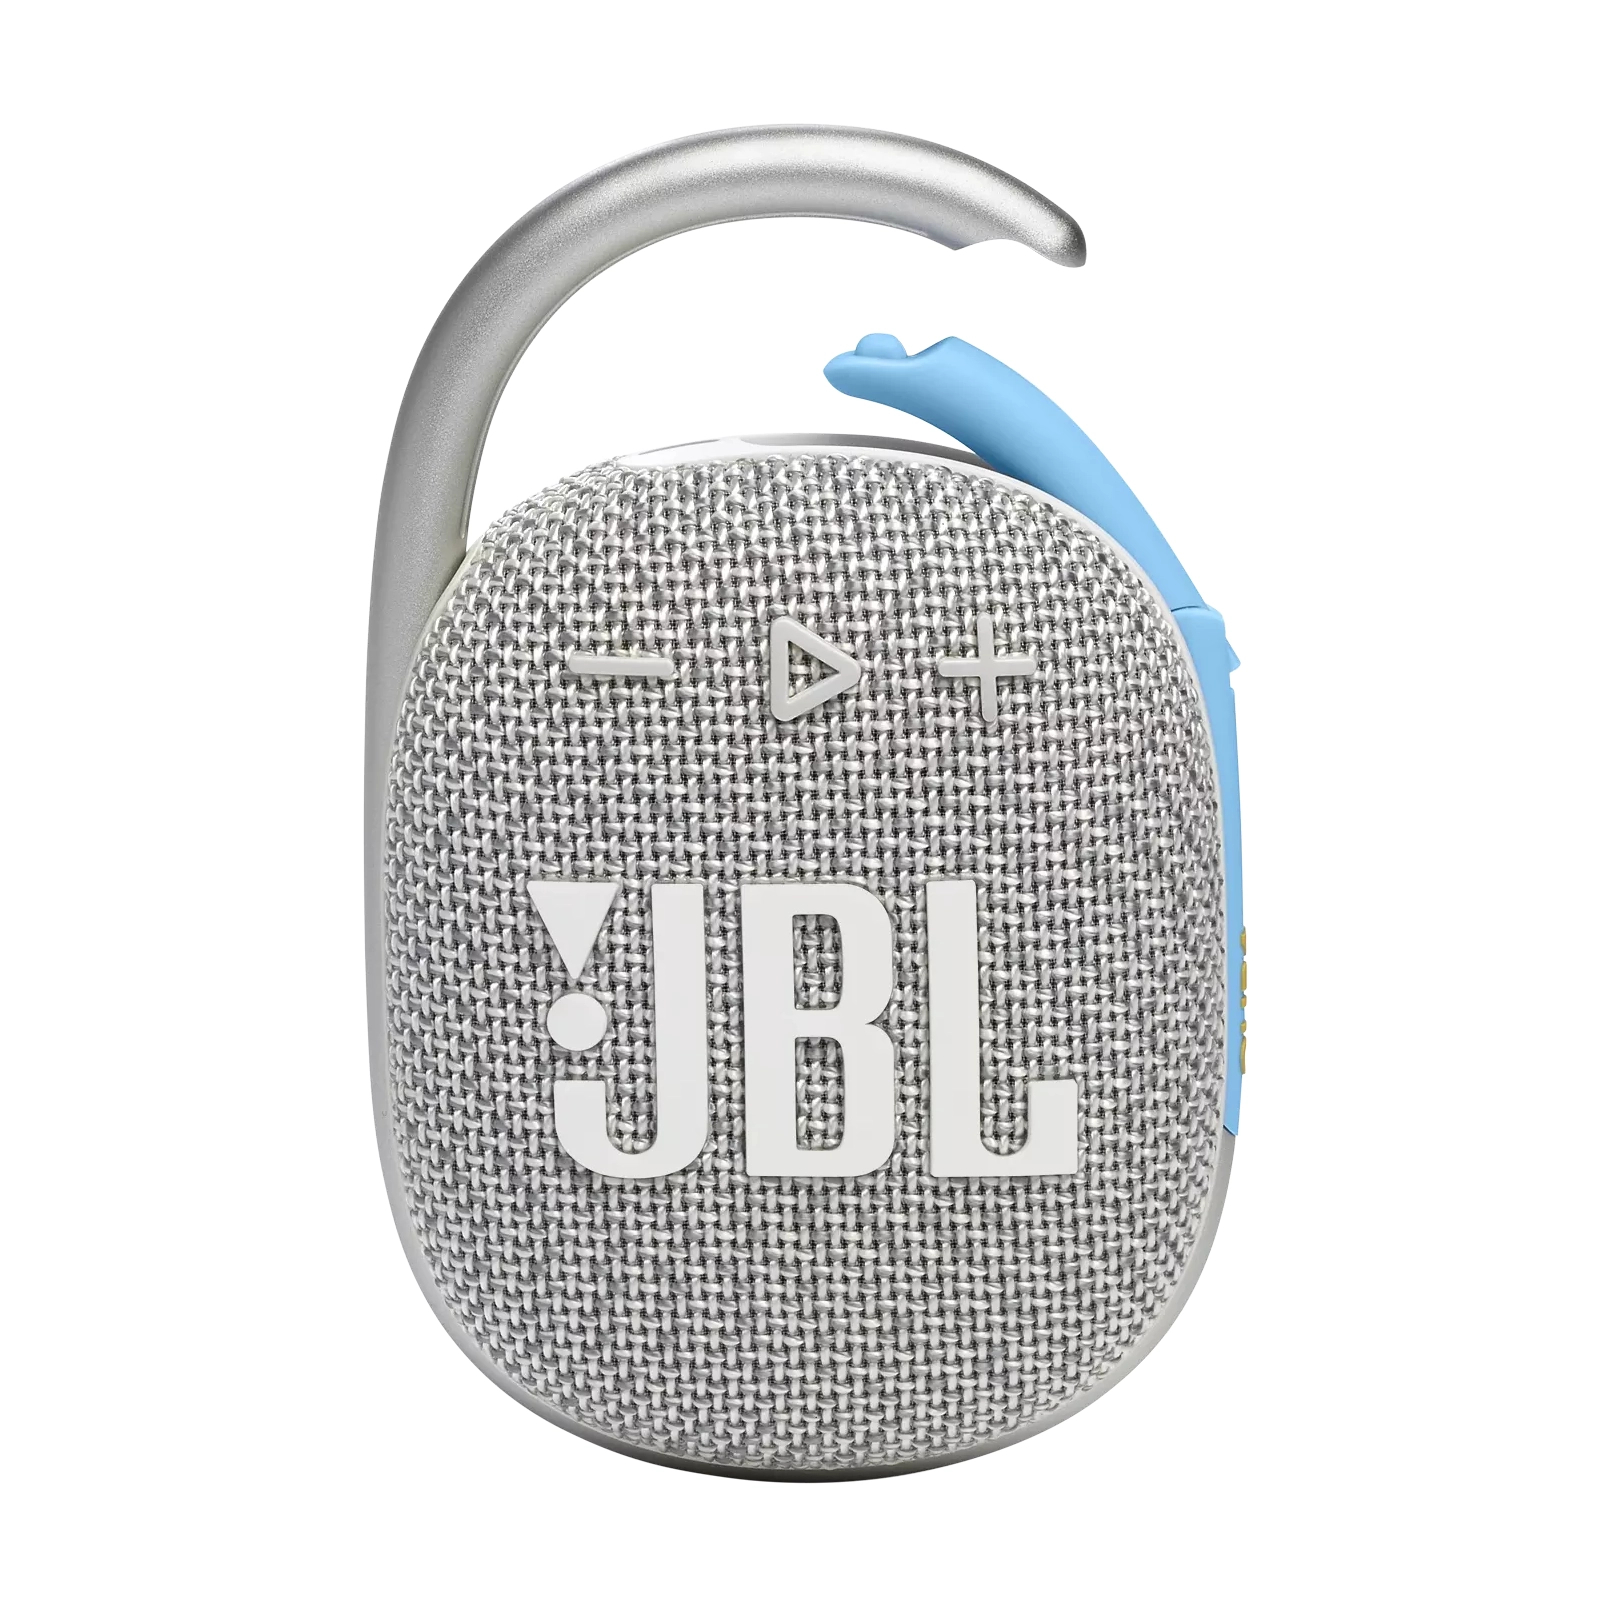 Акустическая система JBL Clip 4 Eco White (JBLCLIP4ECOWHT) изображение 2